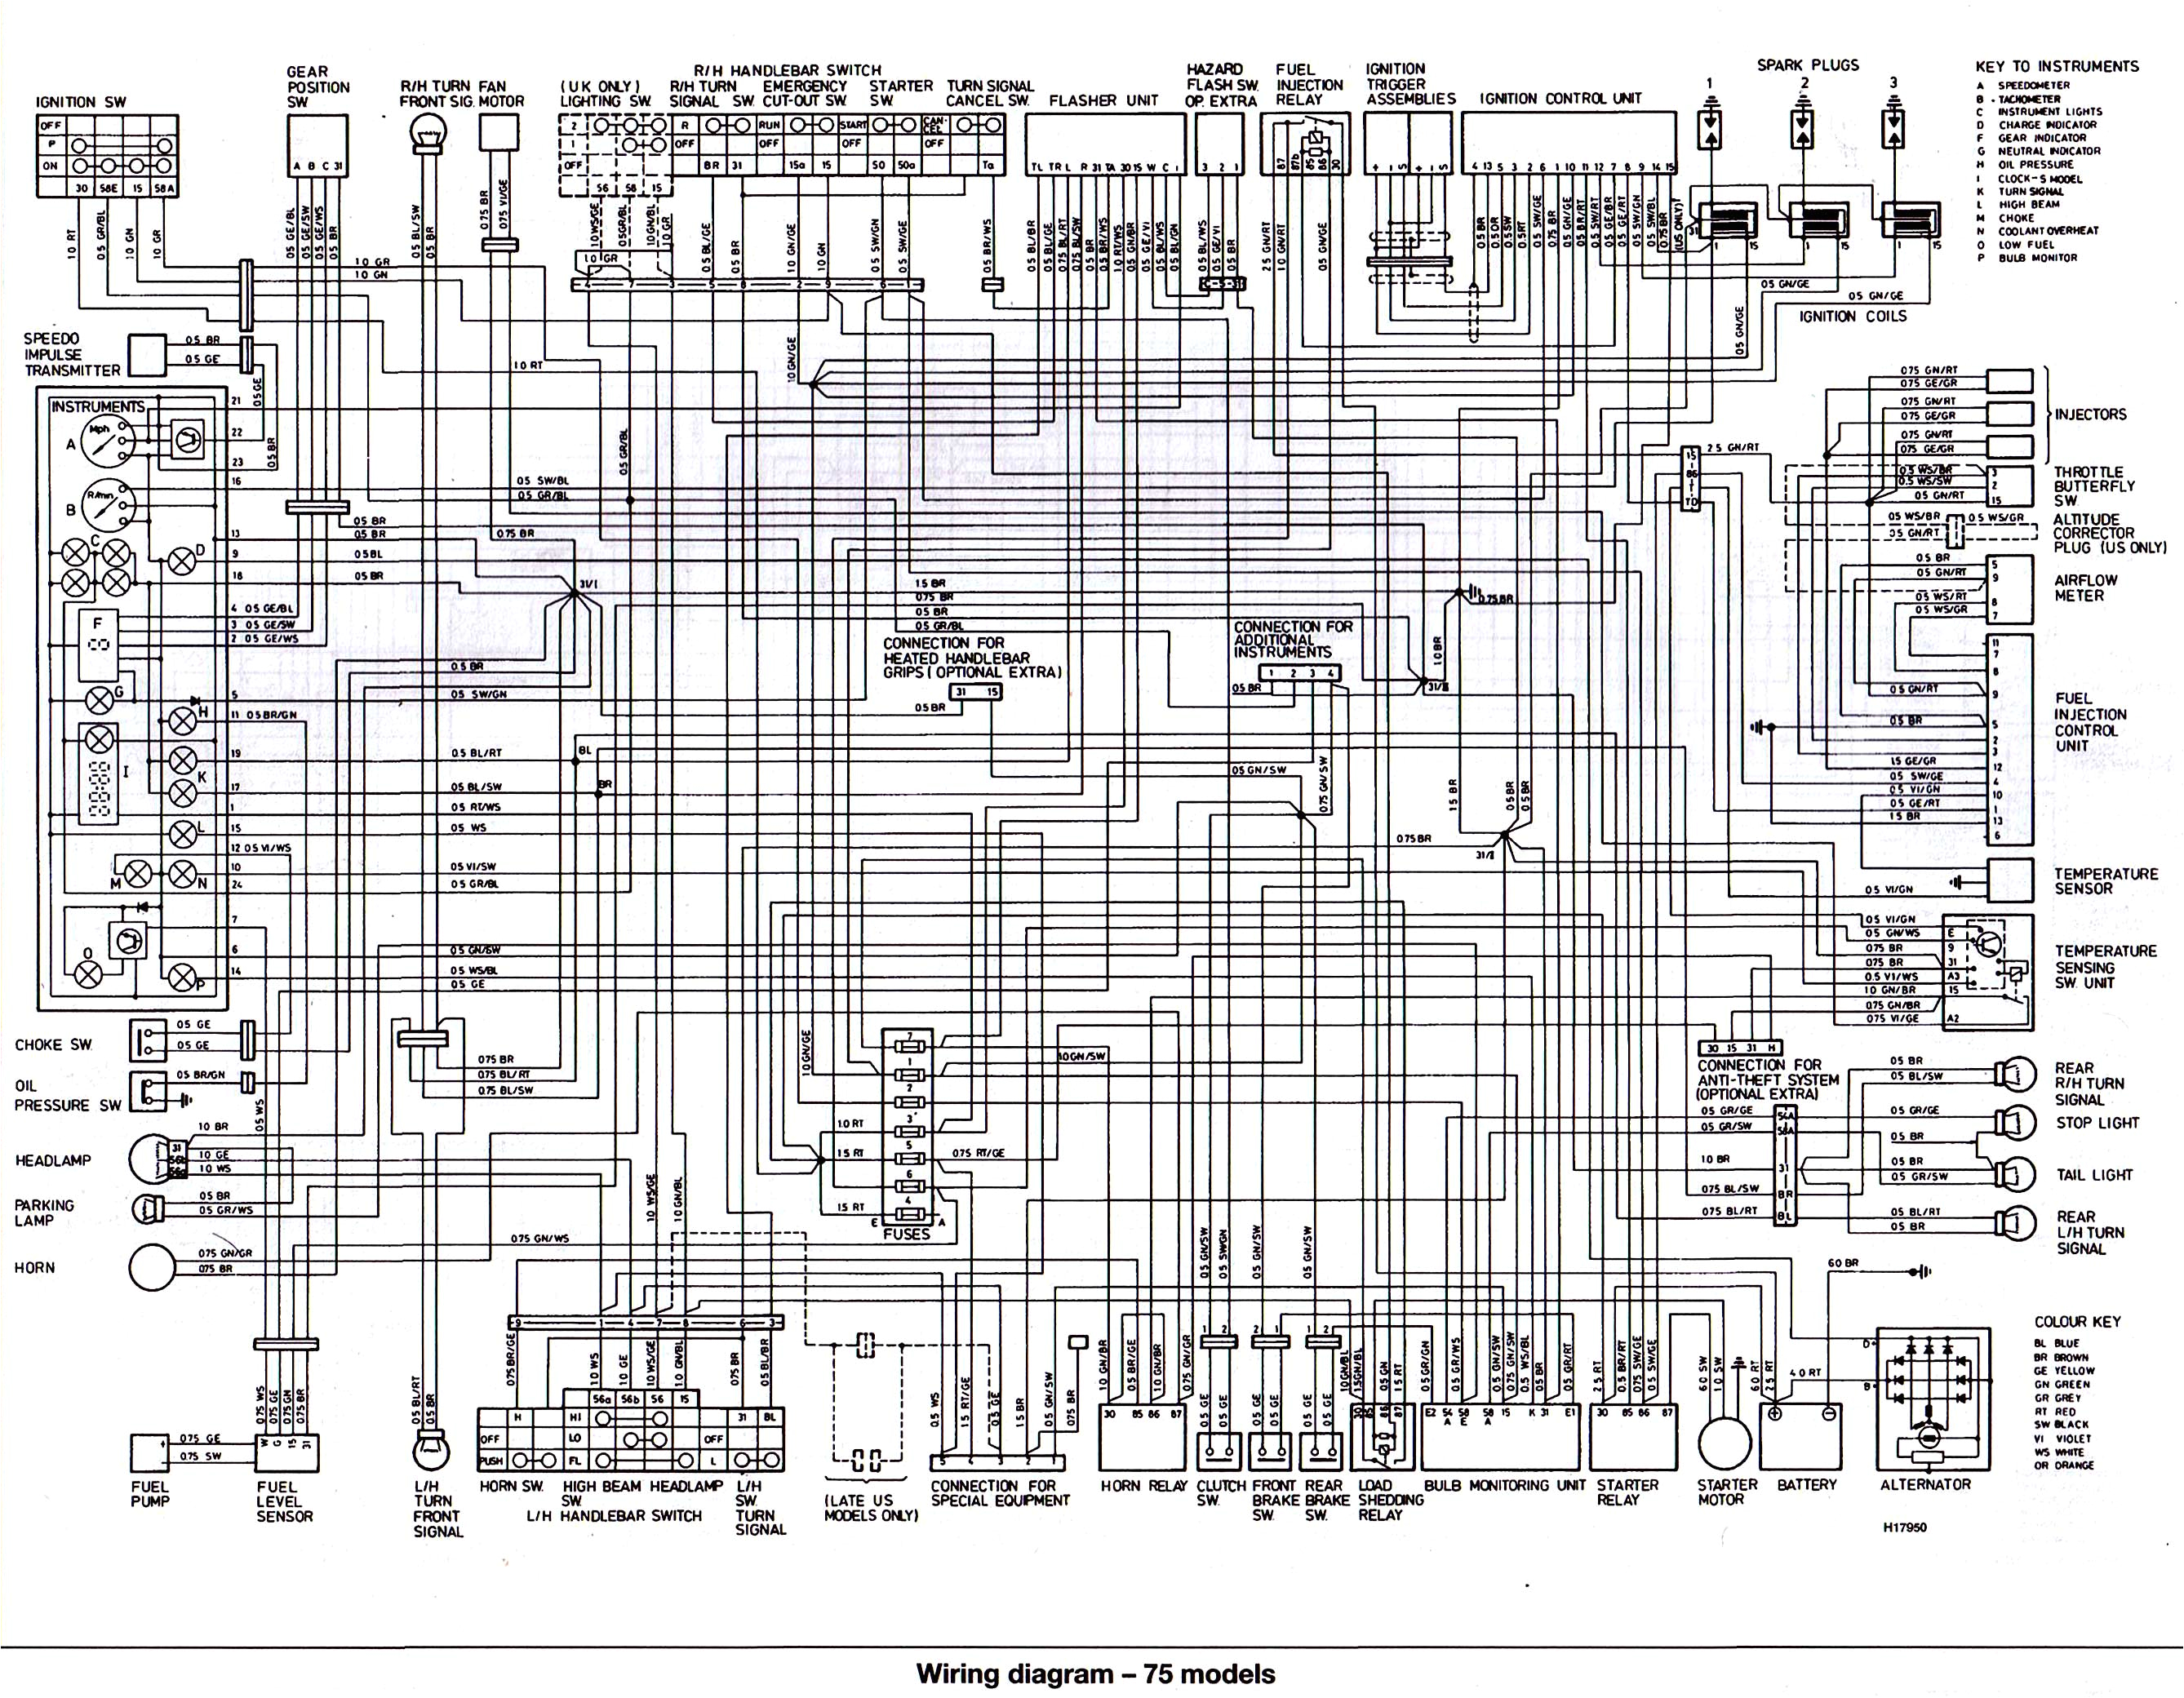 bmw s1000rr wiring diagram wiring diagram inside2016 bmw motorcycle wiring diagram wiring diagram technic bmw s1000rr